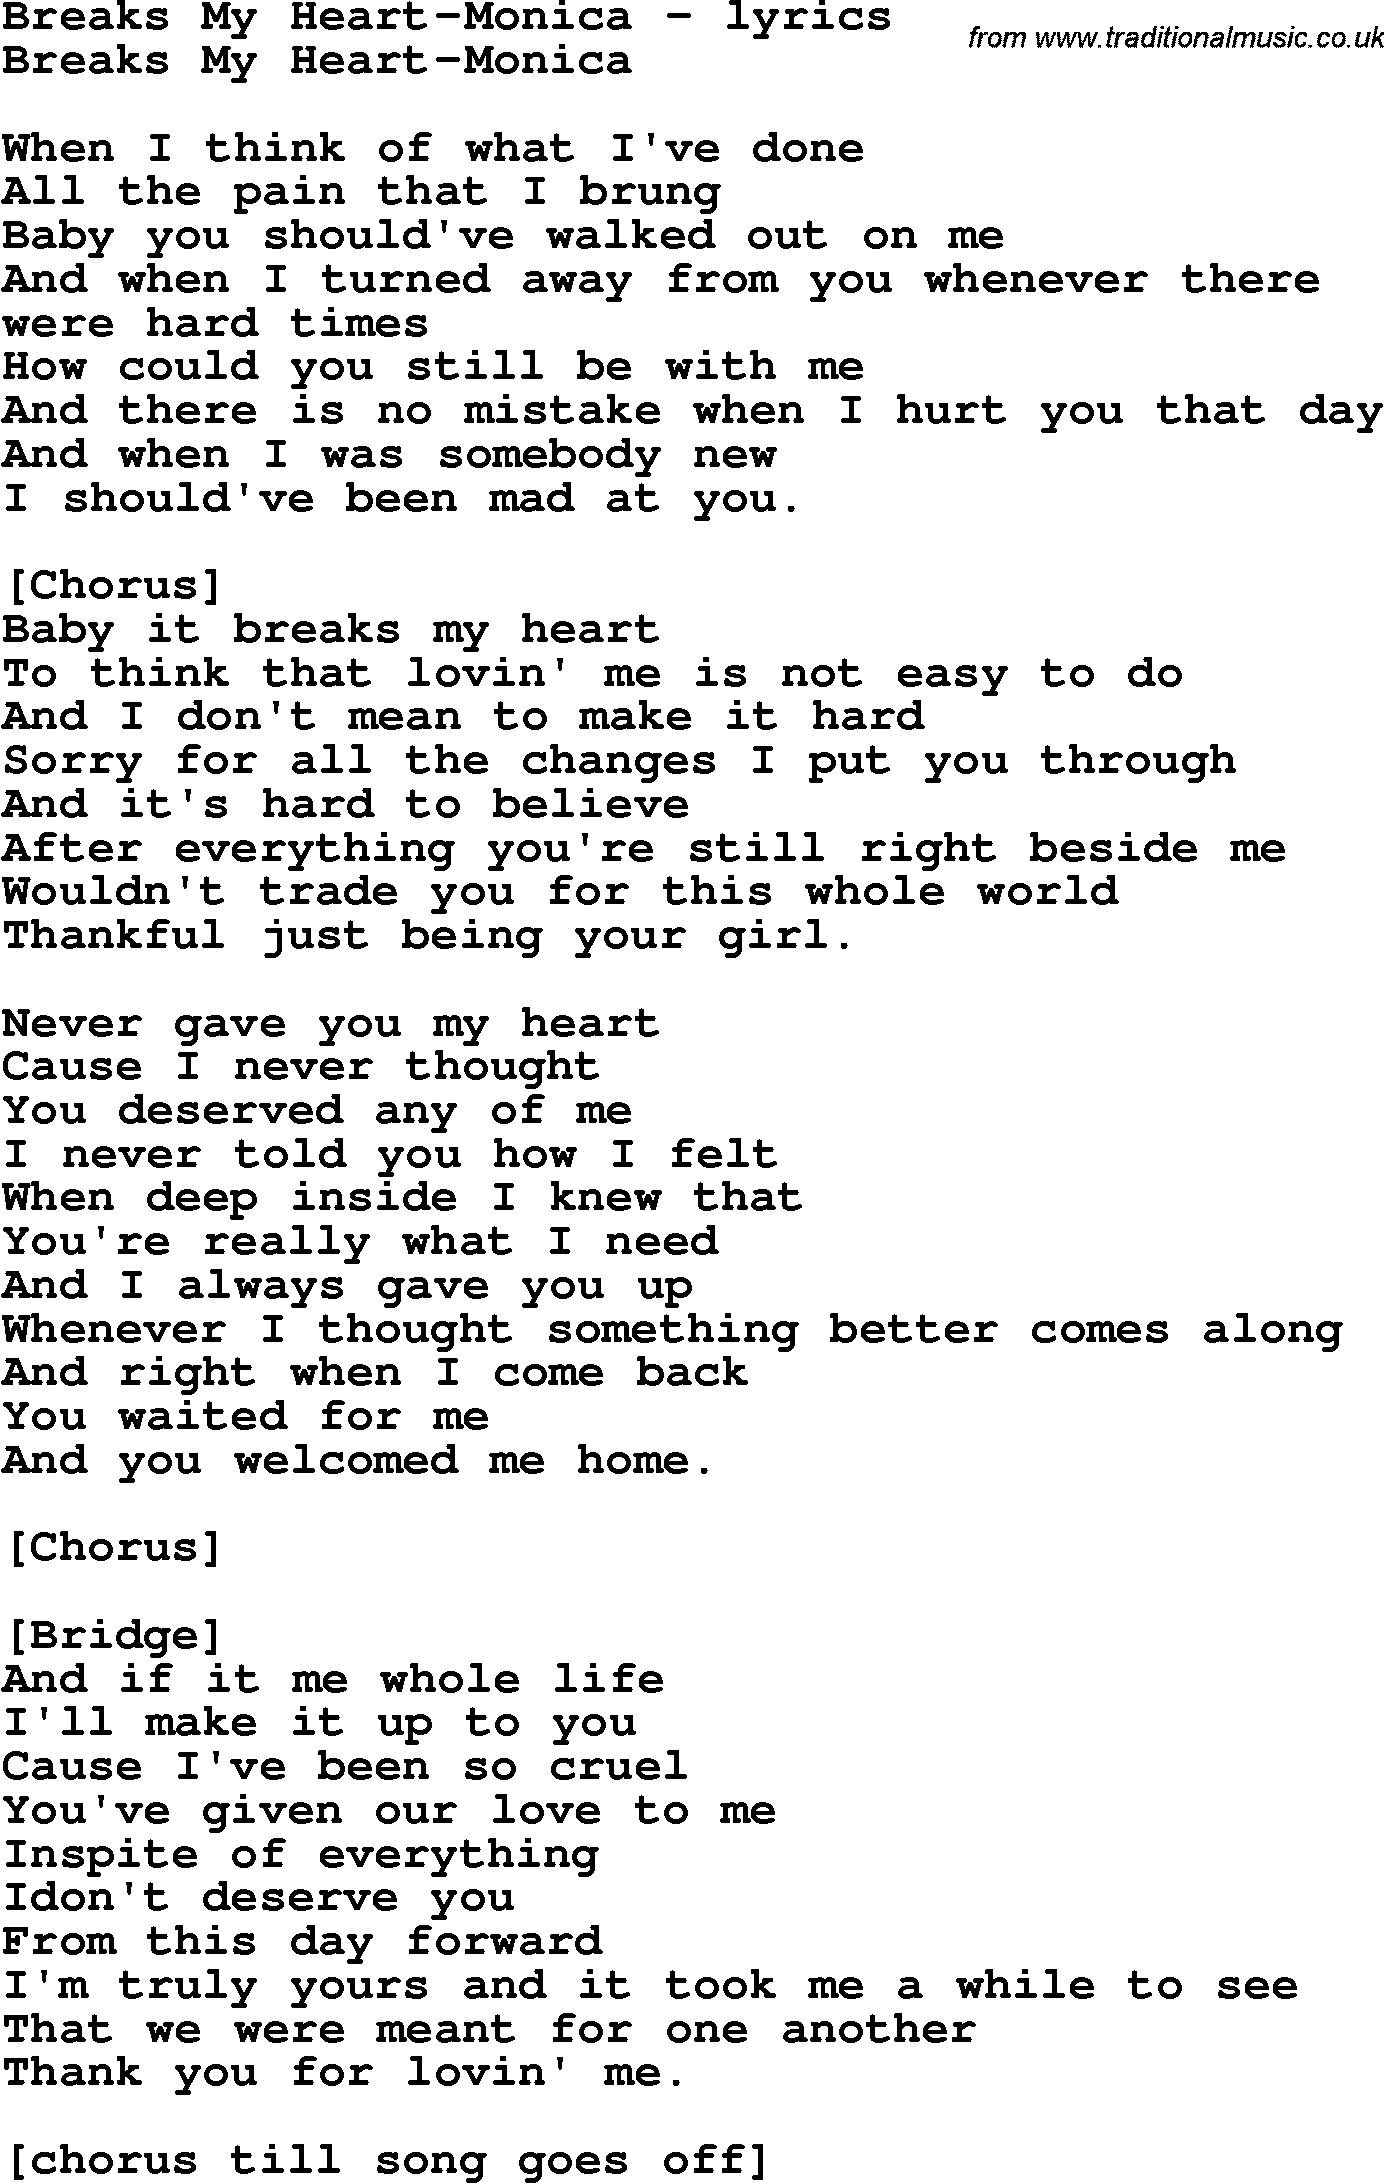 Love Song Lyrics for:Breaks My Heart Monica. www.traditionalmusic.co.uk. 